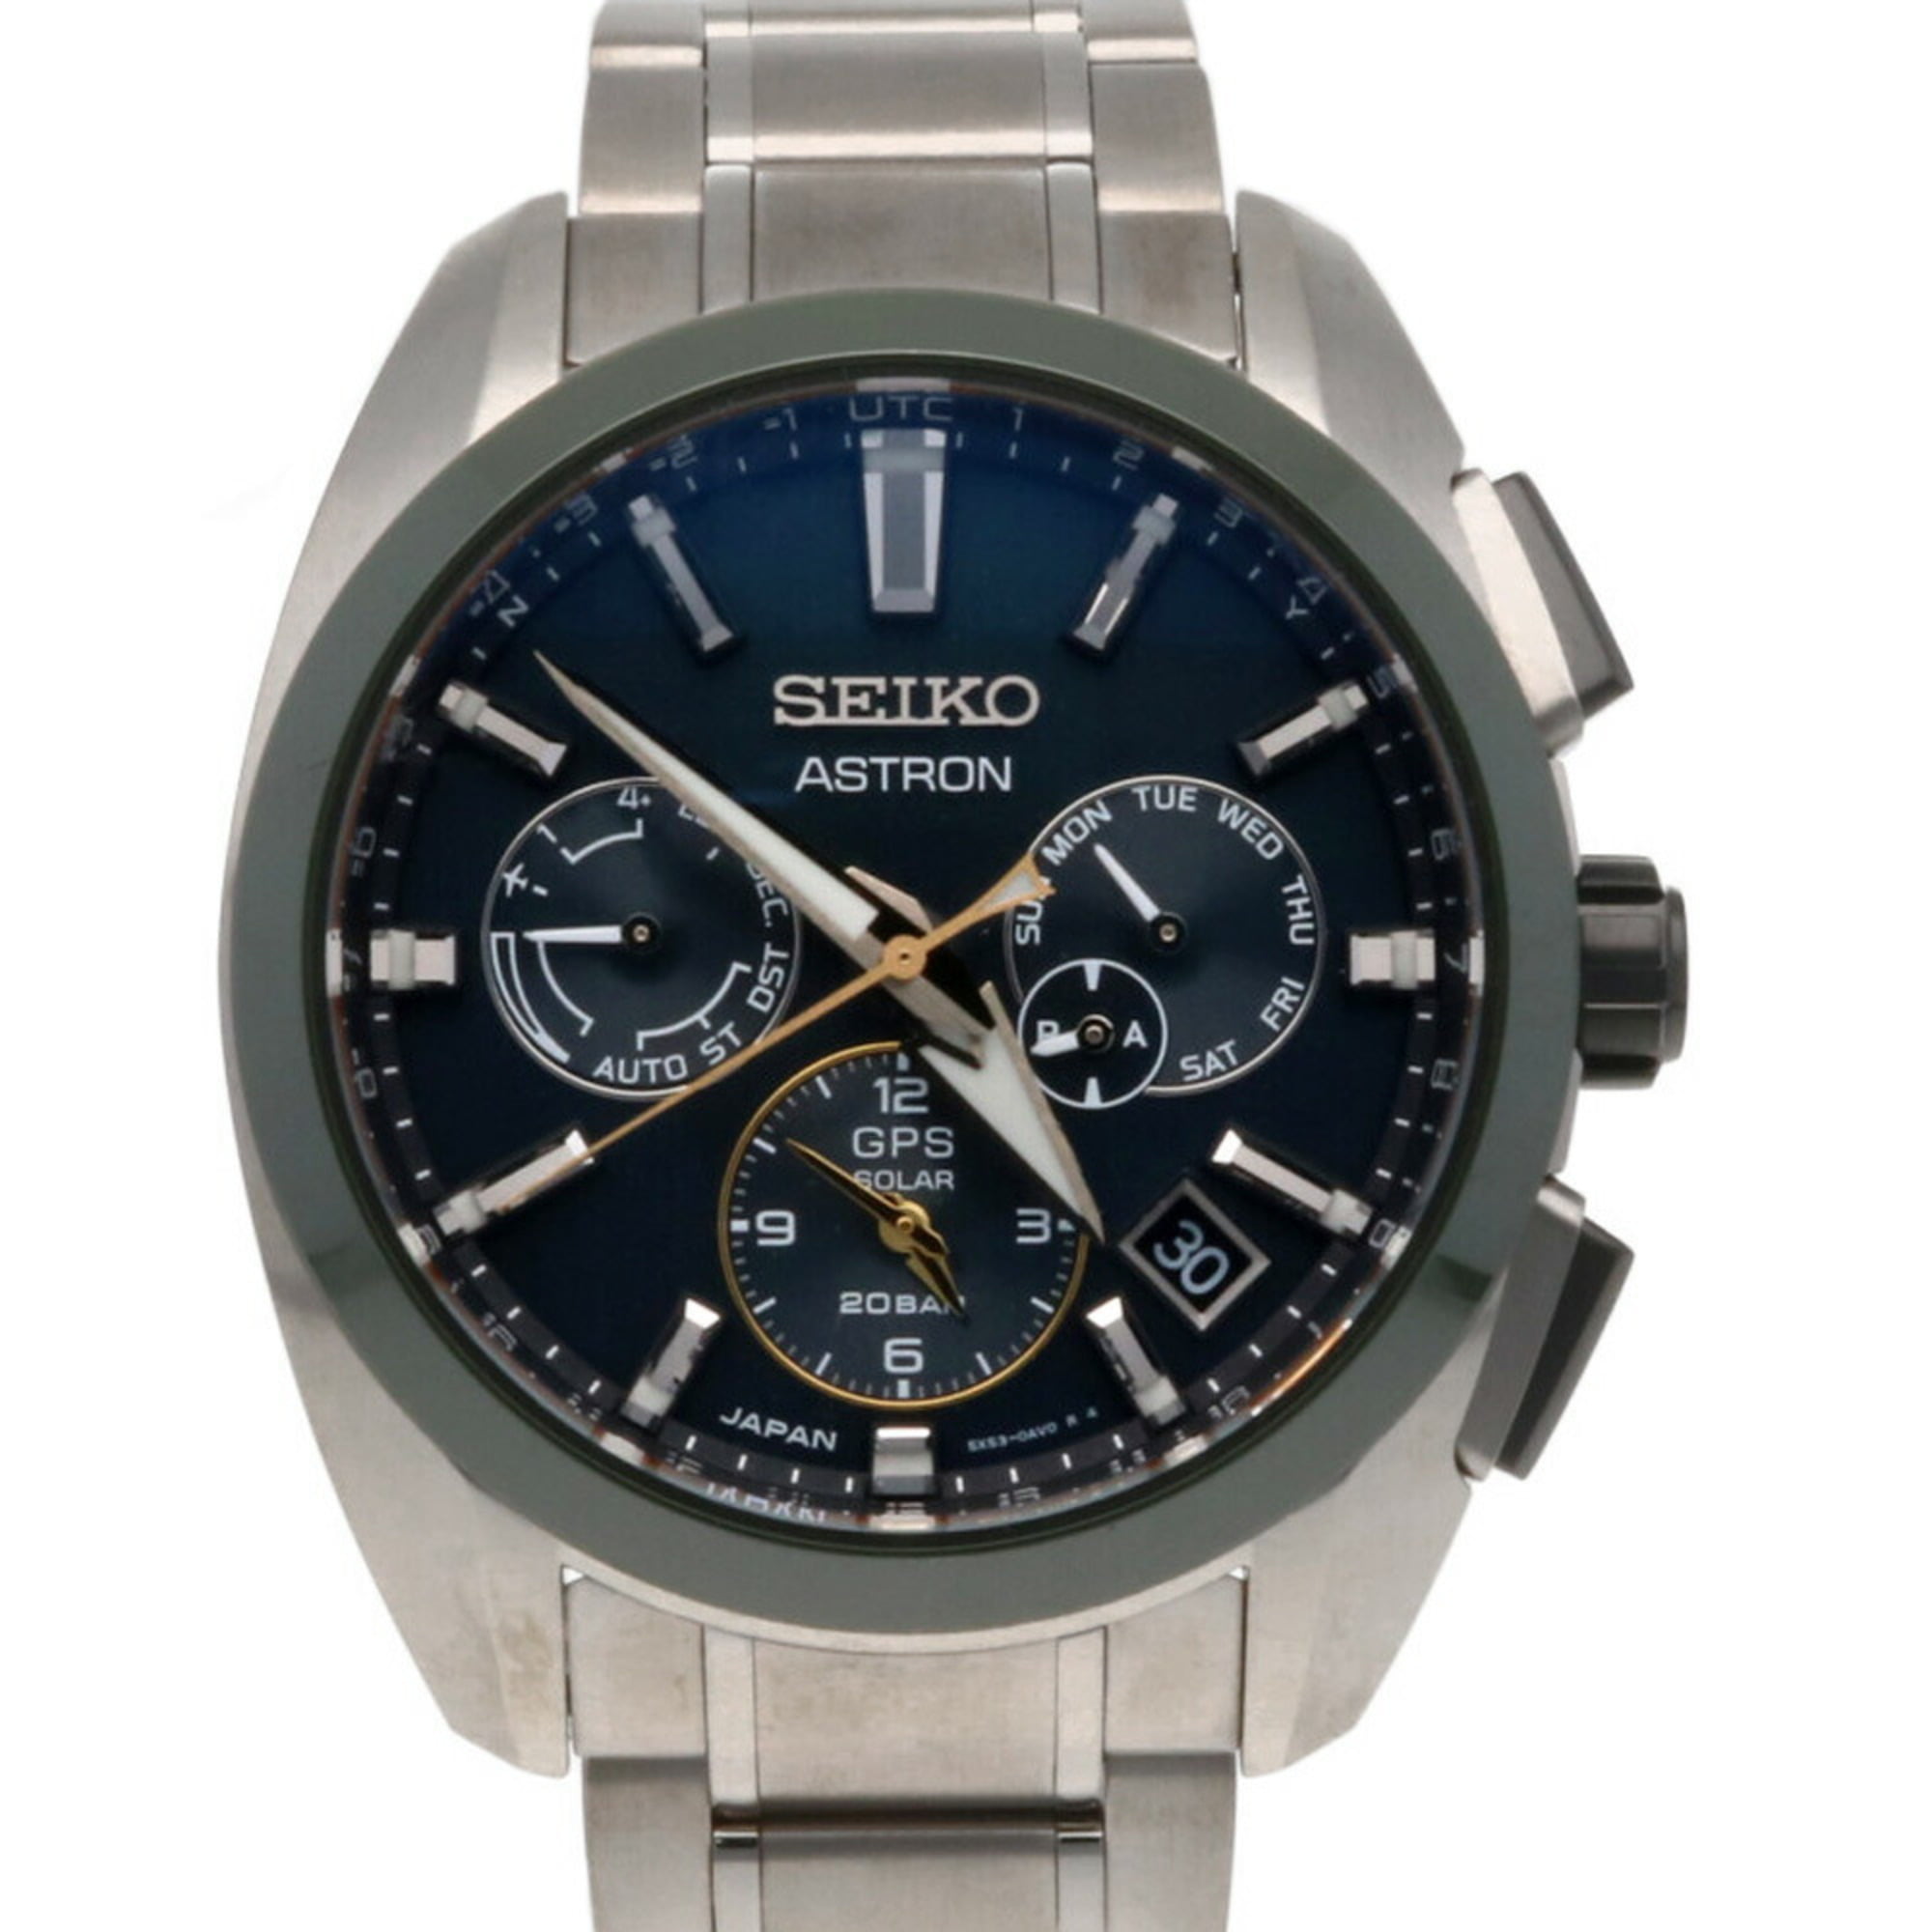 Used Seiko Astron Radio Wave Control Men's Watch 5x53-0ba0 